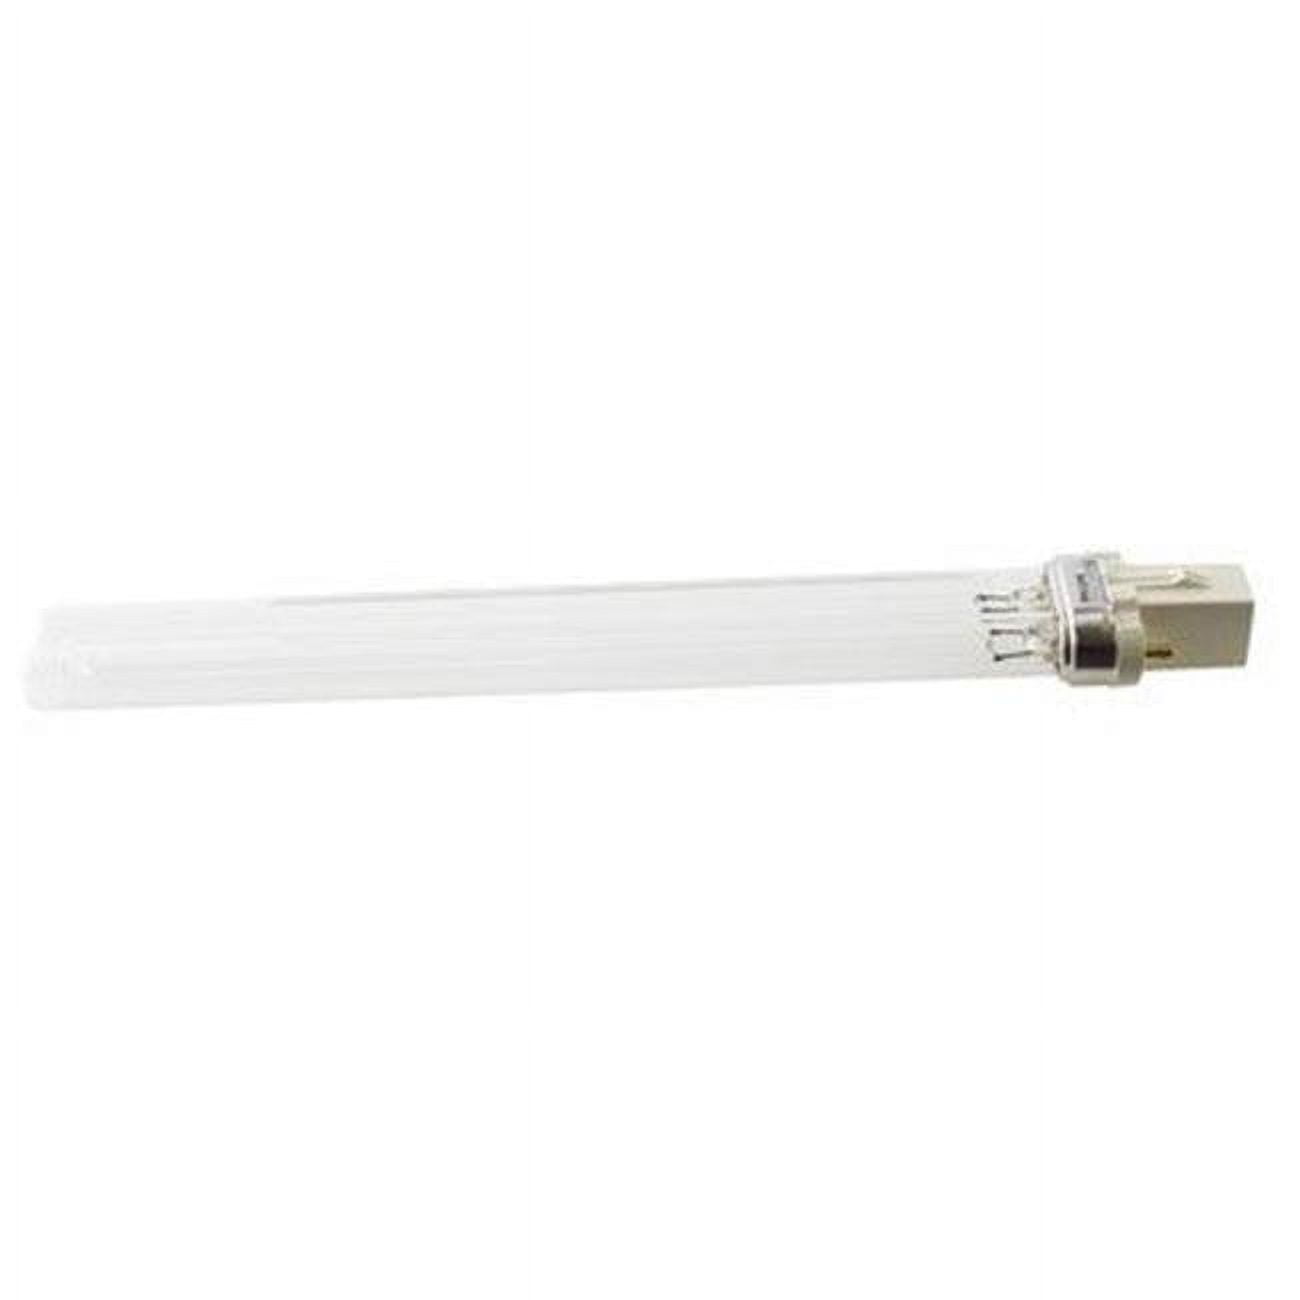 Dny-170242 Tuv Pl-s 11w-2p Germicidal Light Bulb